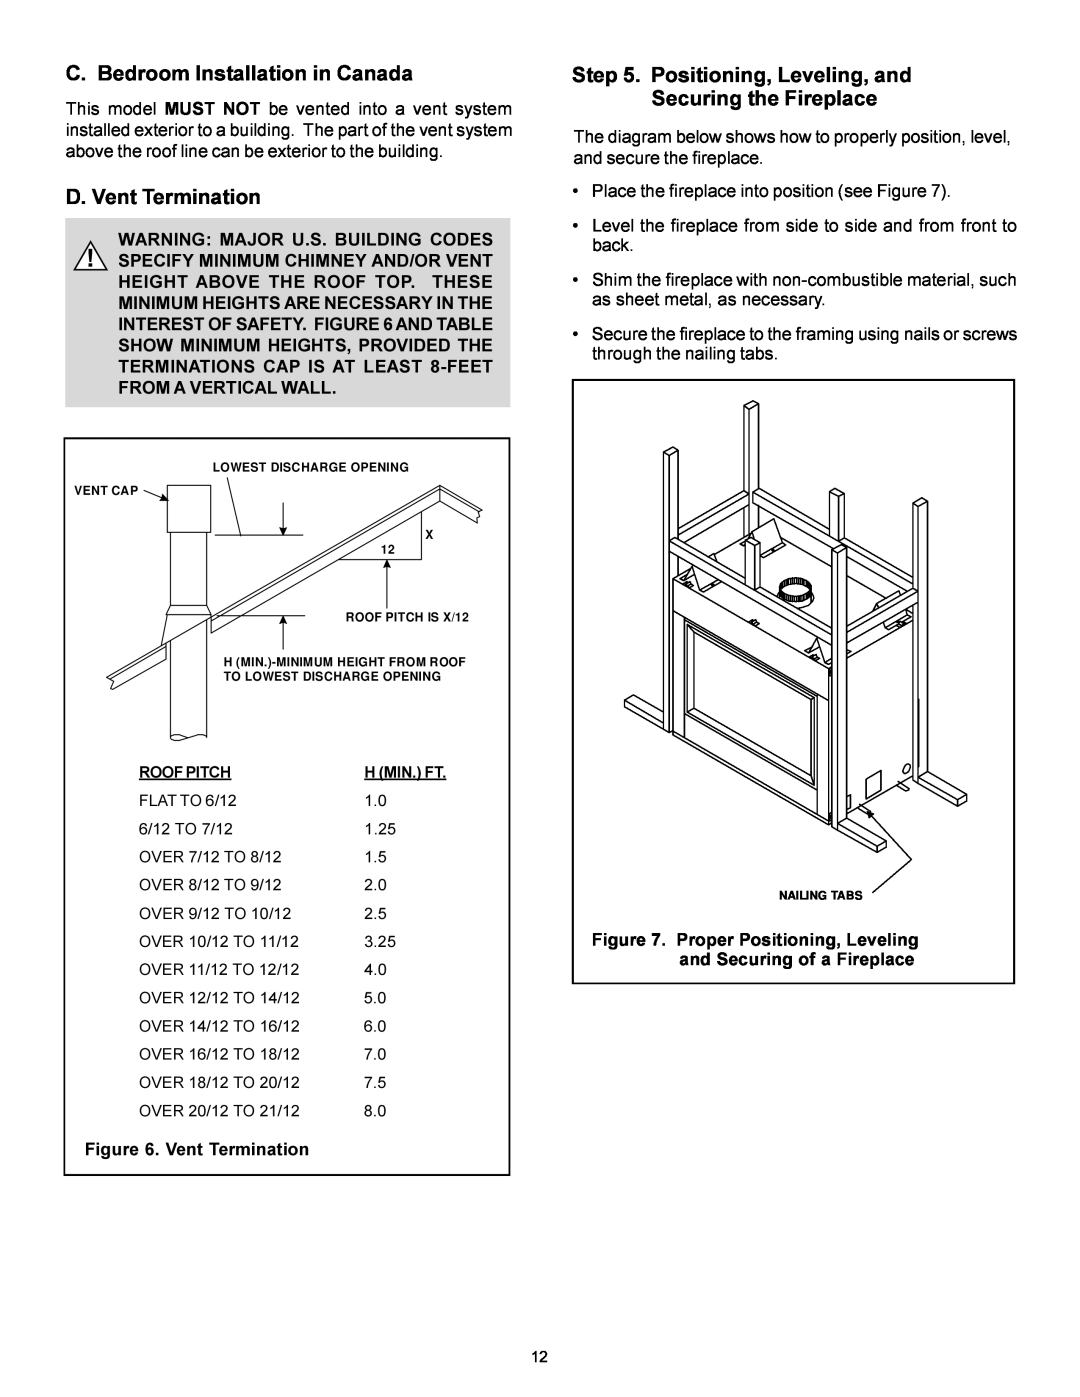 Heat & Glo LifeStyle ST-38GTV C. Bedroom Installation in Canada, D. Vent Termination, Warning Major U.S. Building Codes 